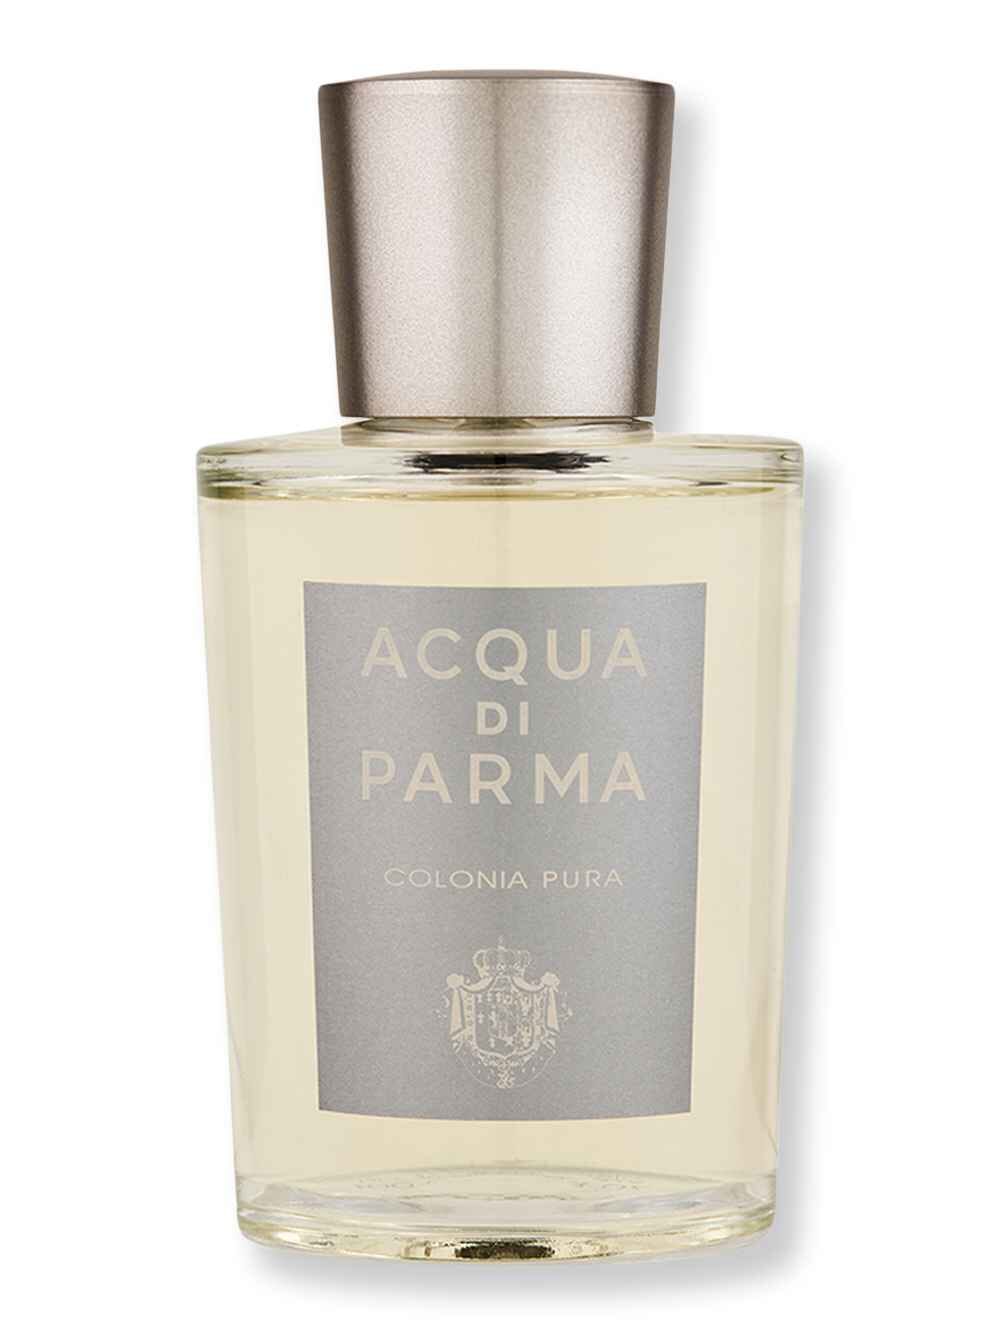 Acqua di Parma Acqua di Parma Colonia Pura Eau de Cologne 3.4 oz100 ml Perfumes & Colognes 